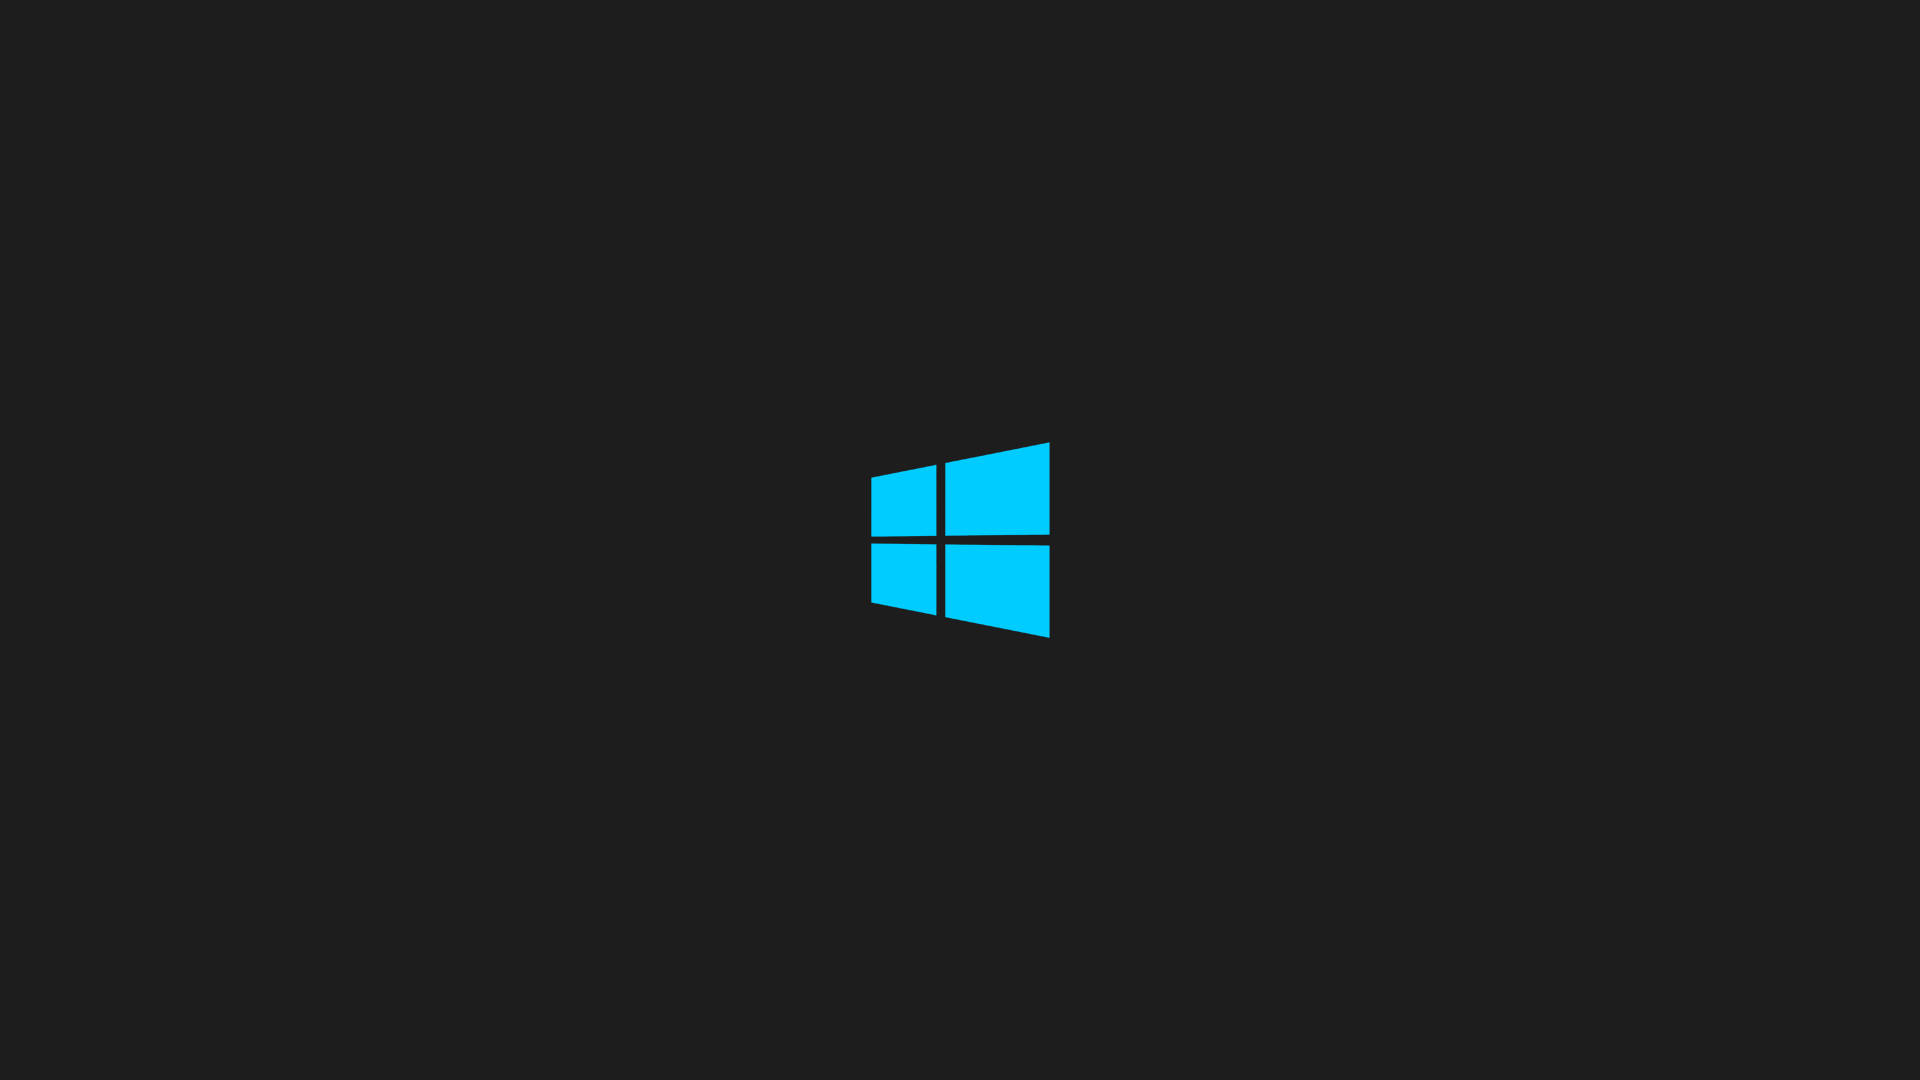 Black Windows 10 Hd Blue Logo Wallpaper